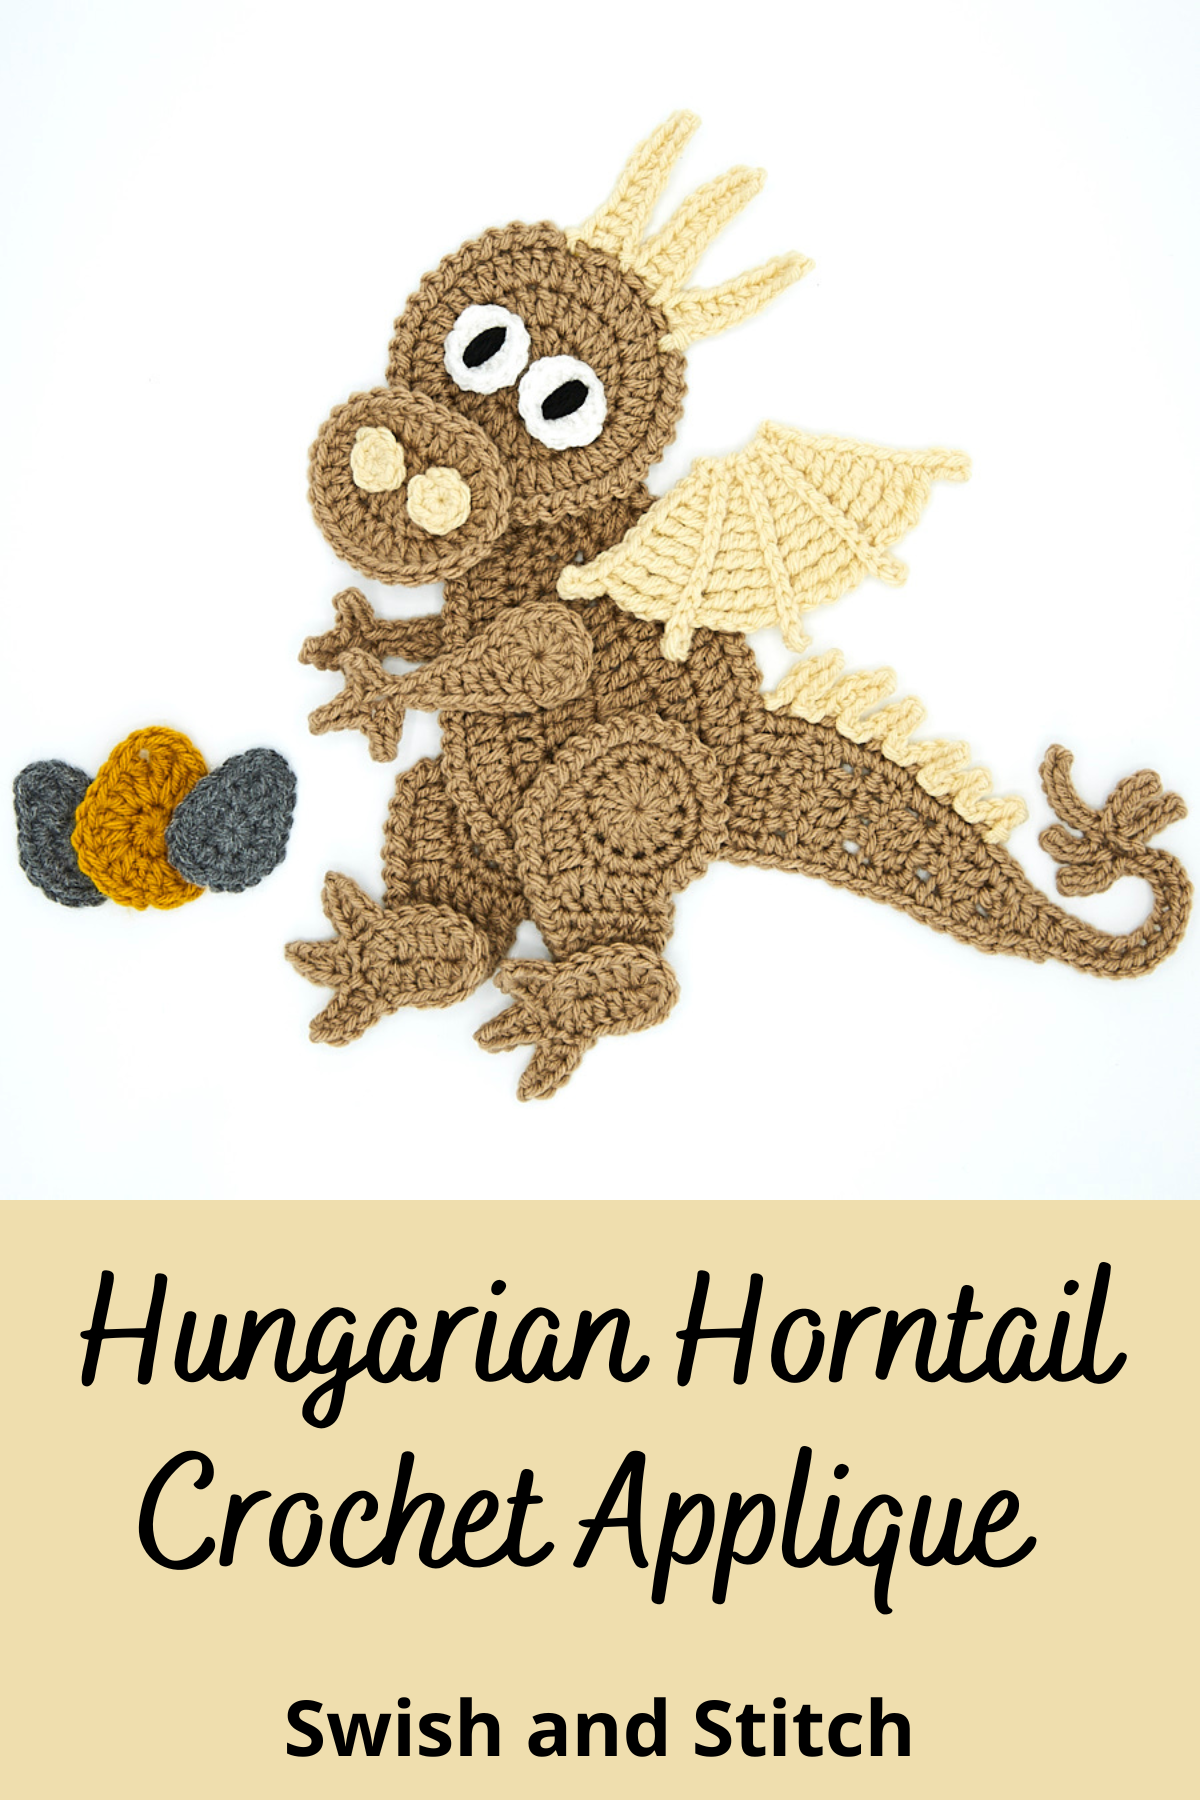 Harry Potter Hogwarts Crochet Applique Dragon - Pinterest Image